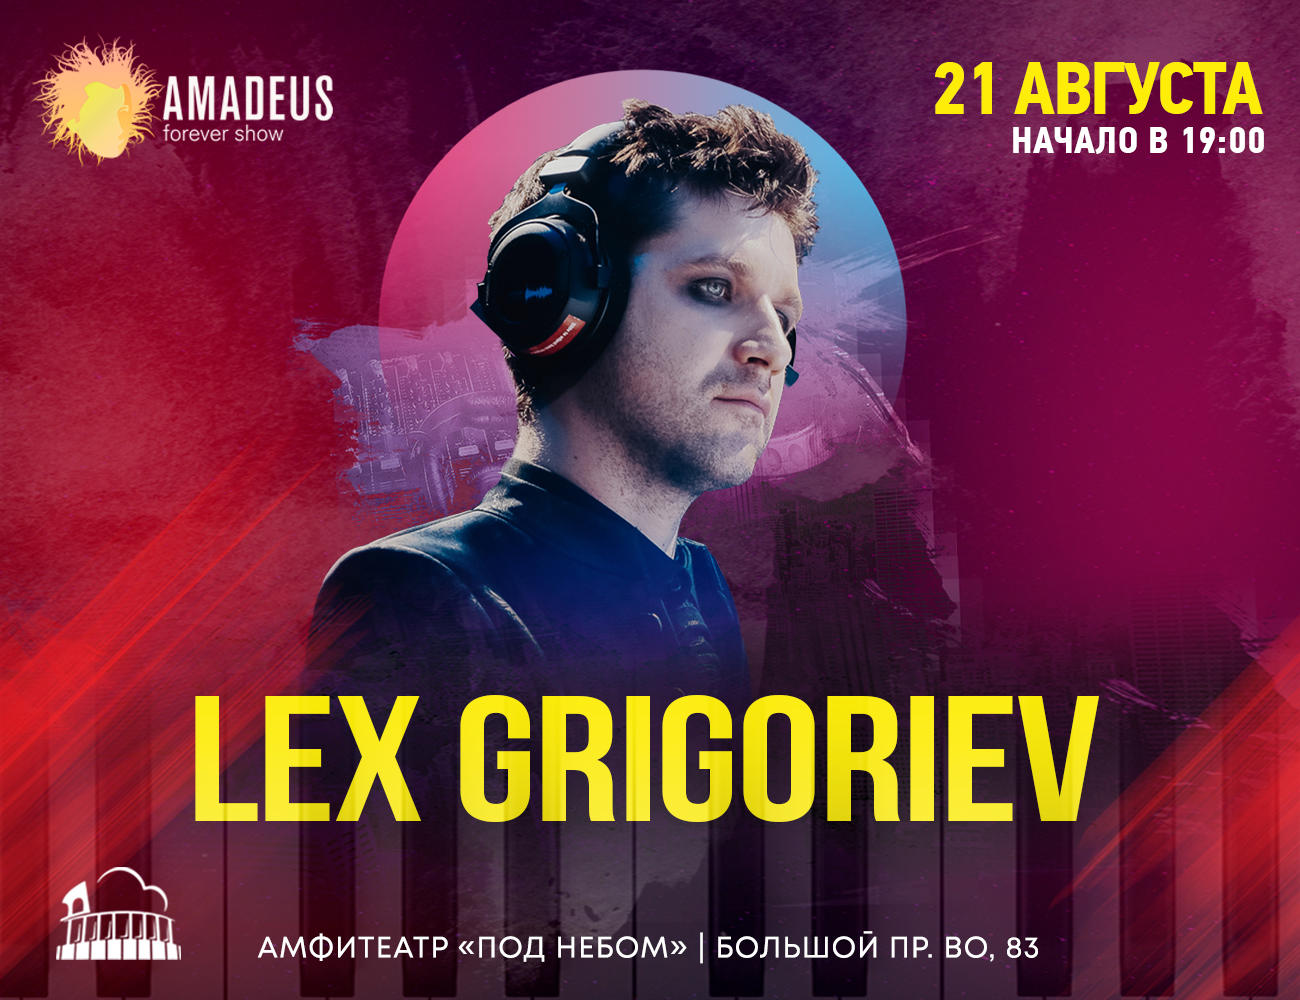 LEX Grigoriev